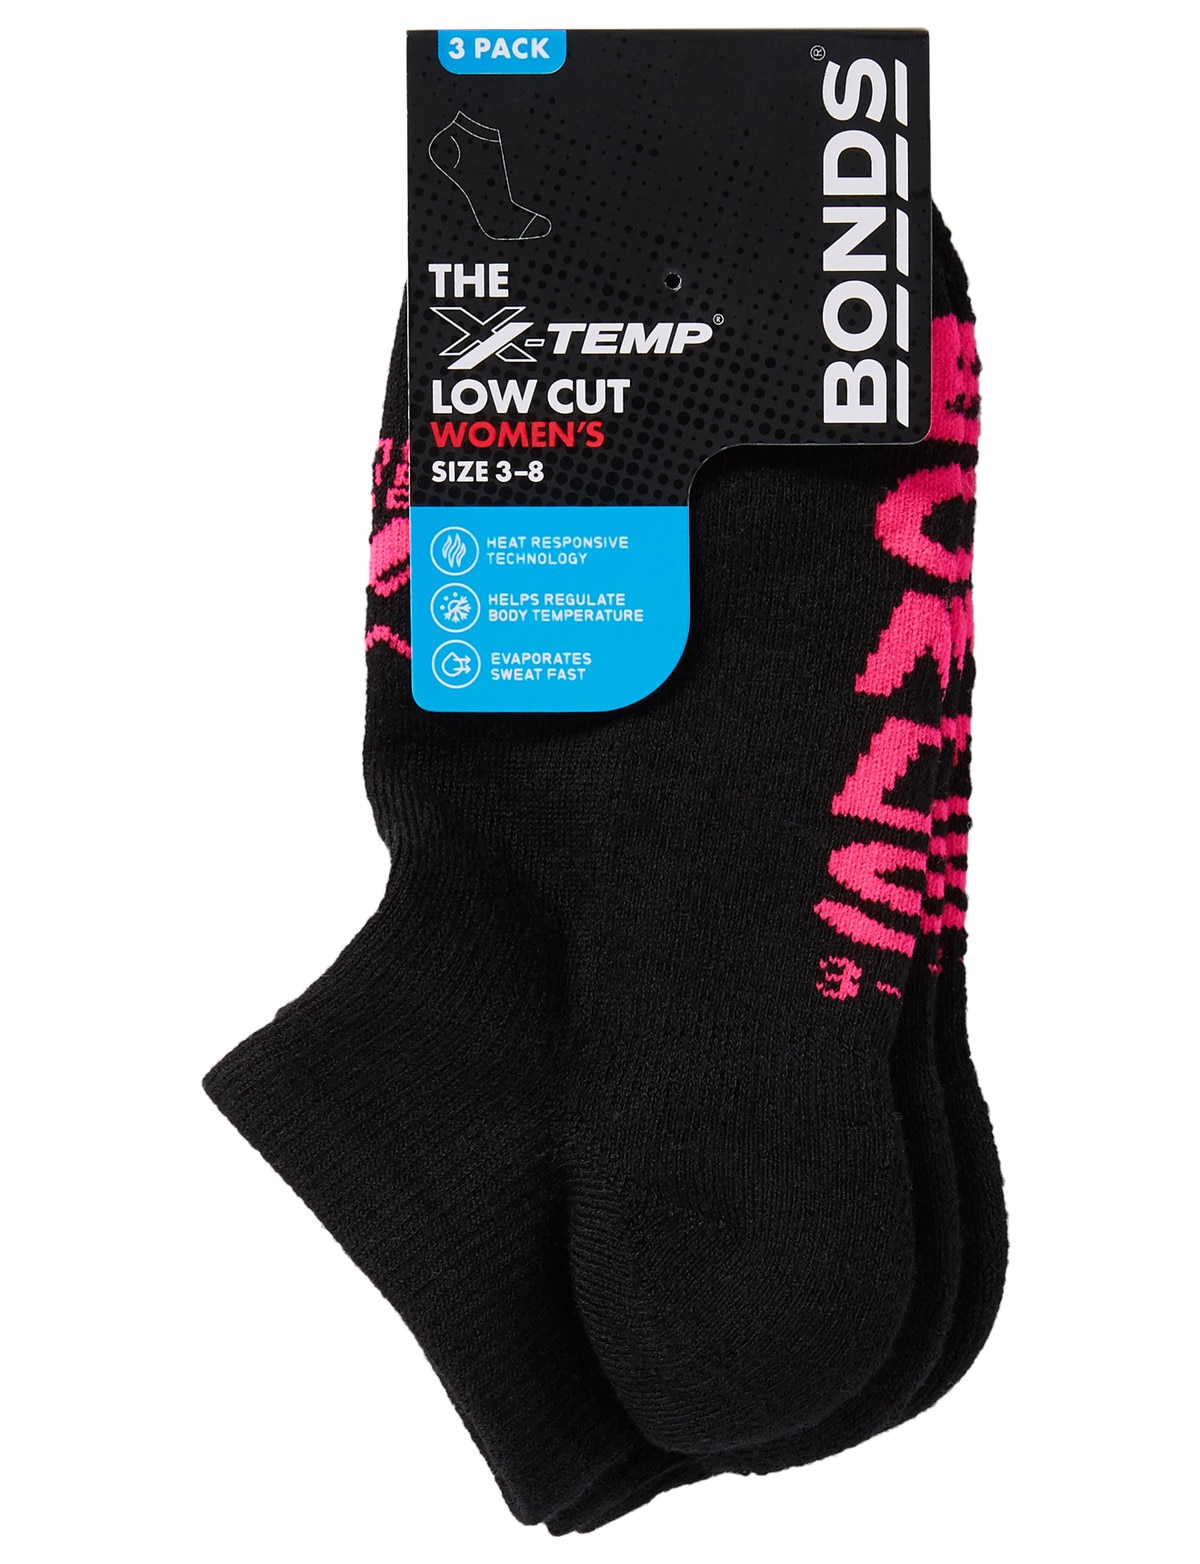 Bonds Womens Socks Low Cut Size 3-8 Assorted 3 Pack